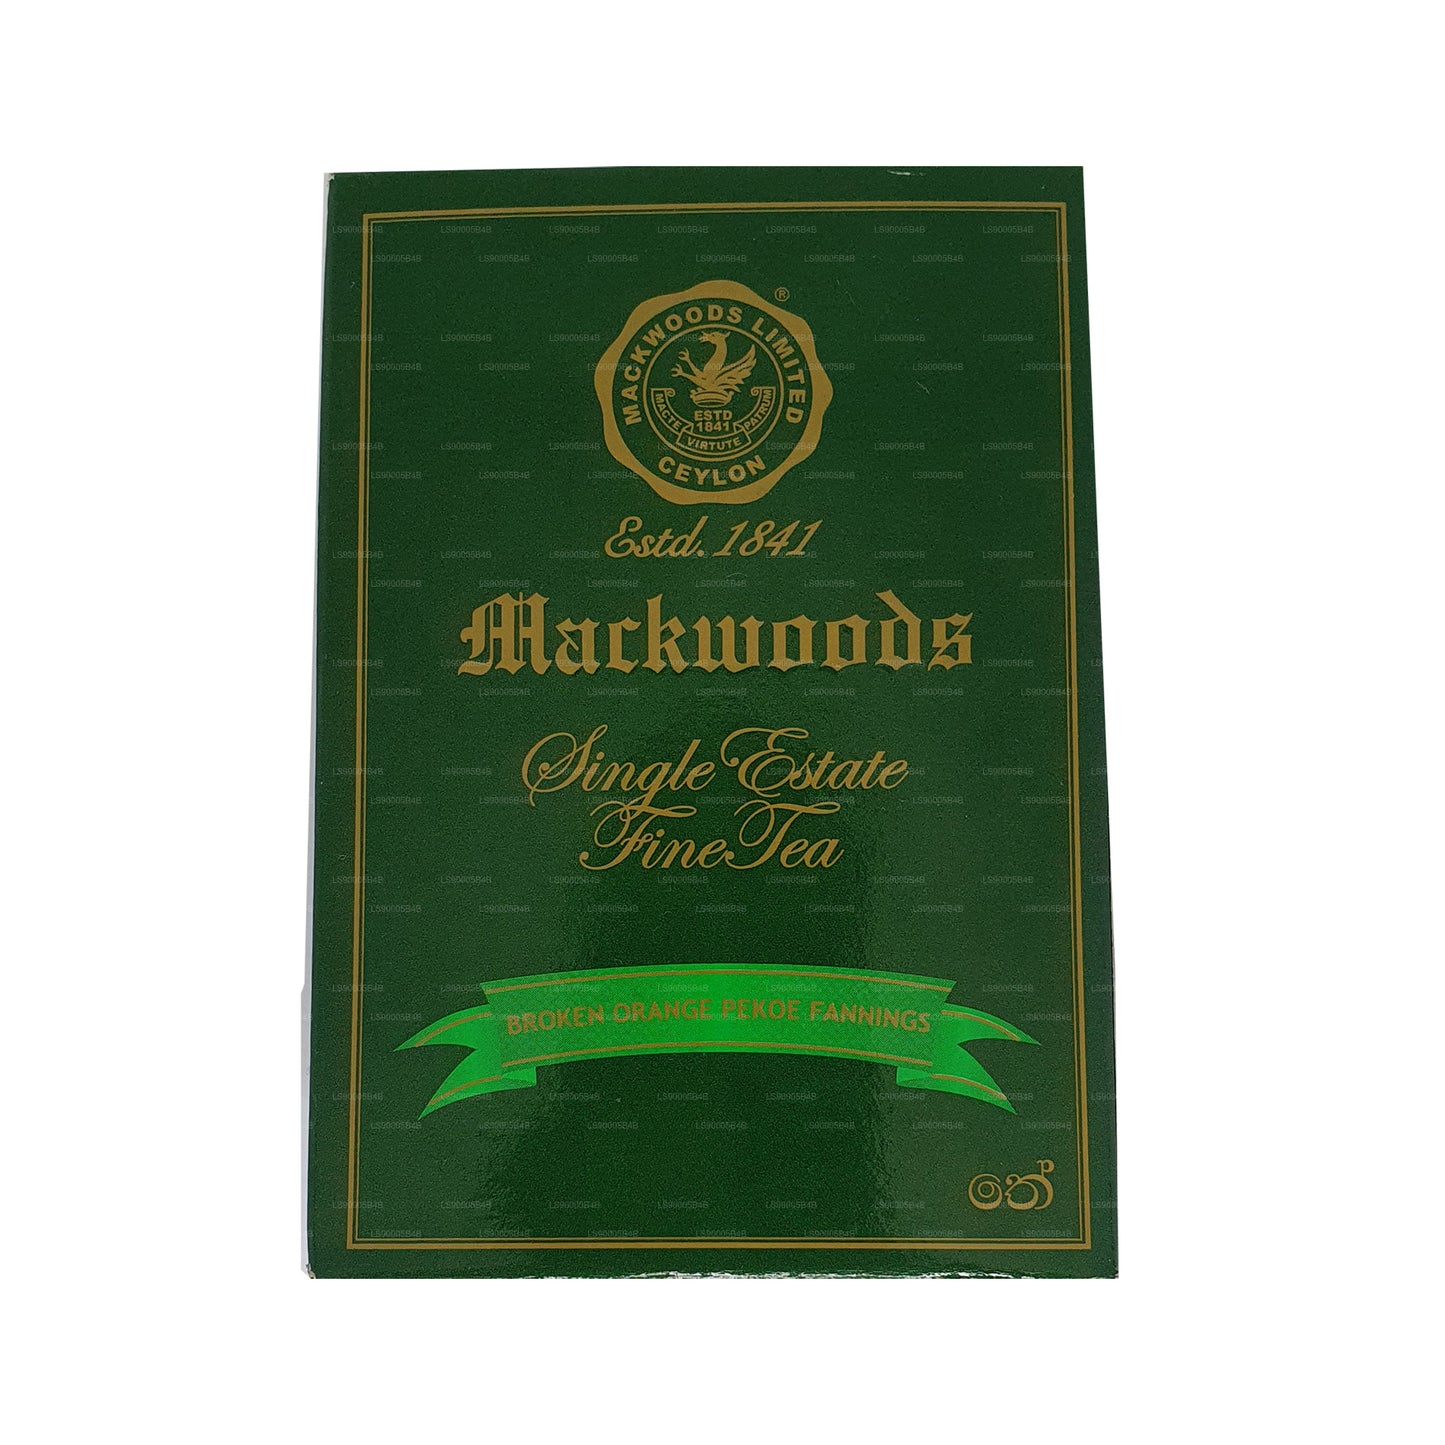 Mackwoods Single Estate Broken Orange Pekoe Fannings (BOPF) Herbata czarna cejlońska z luźnymi liśćmi (200g)